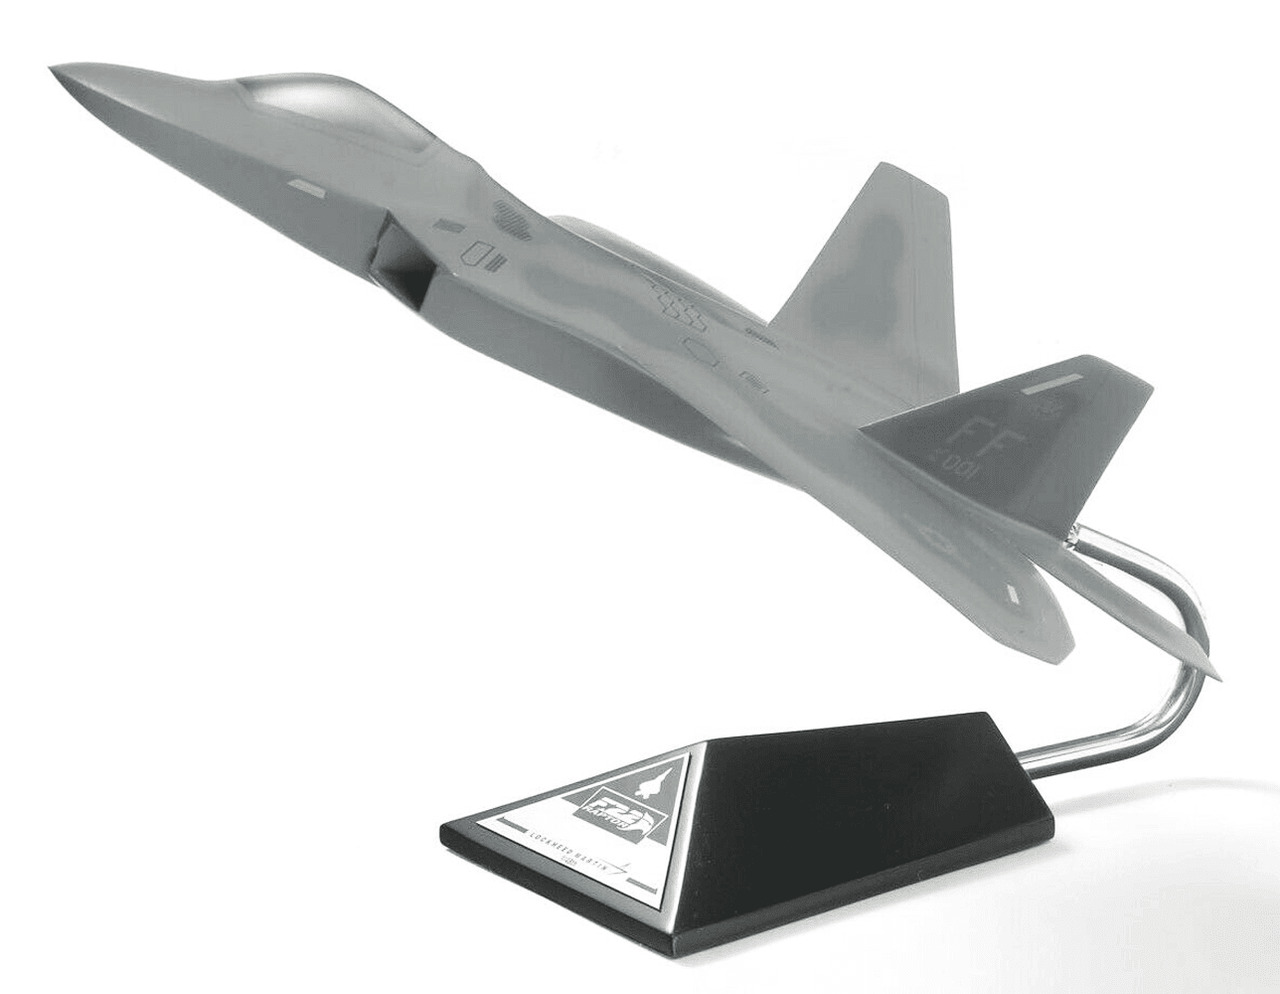 USAF Lockheed Boeing F-22 Raptor Desk Display Fighter Jet Model 1/48 ES Airplane